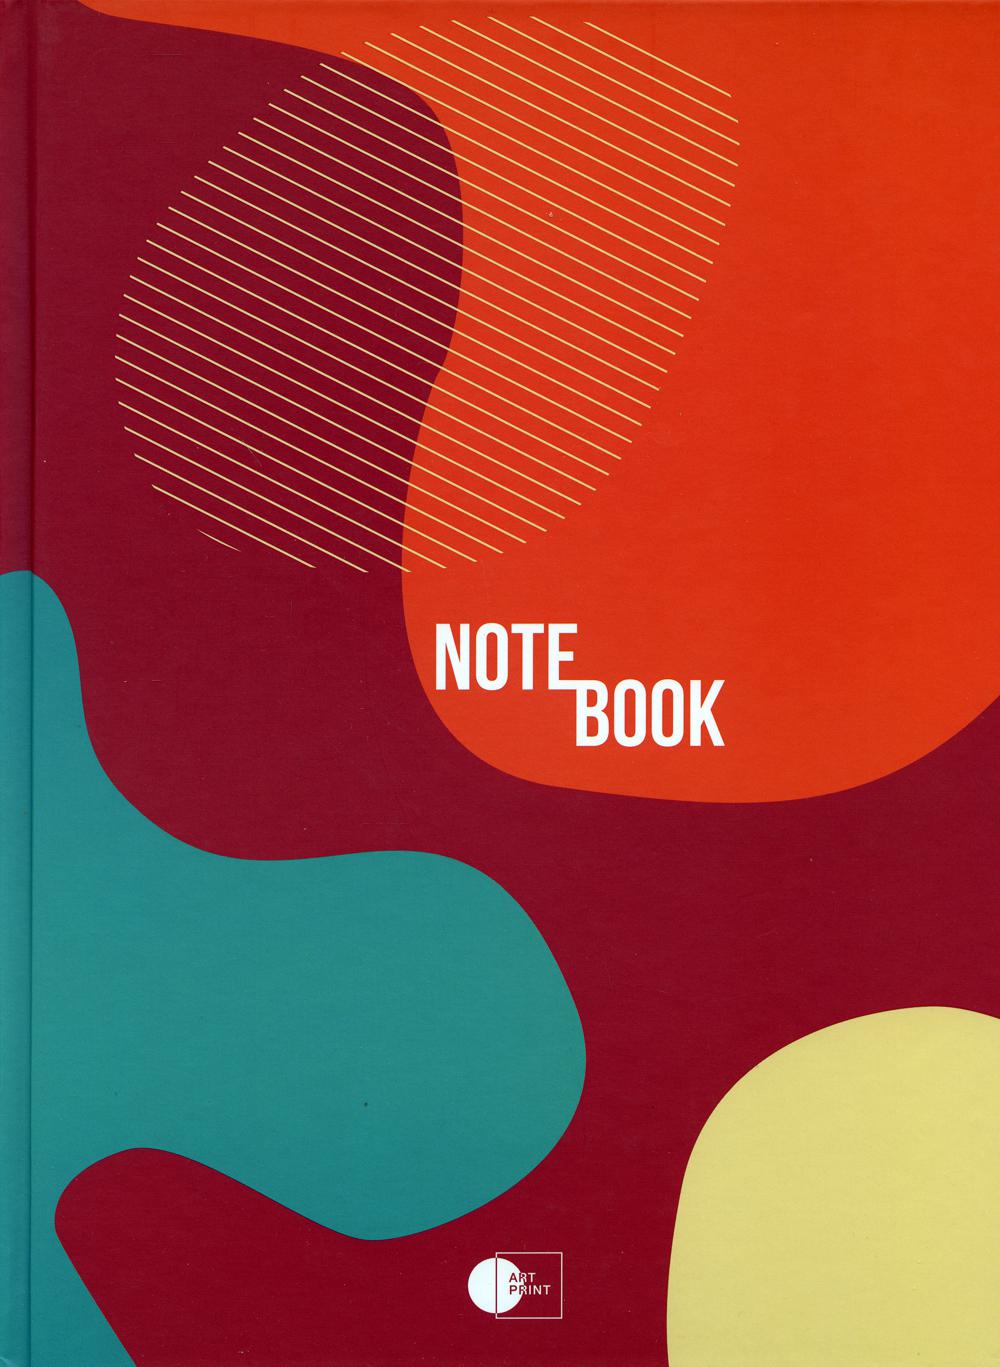 Блокнот АртПринт для офиса Абстракция цветные пятна / Abstract notebook one А4 192 стр.